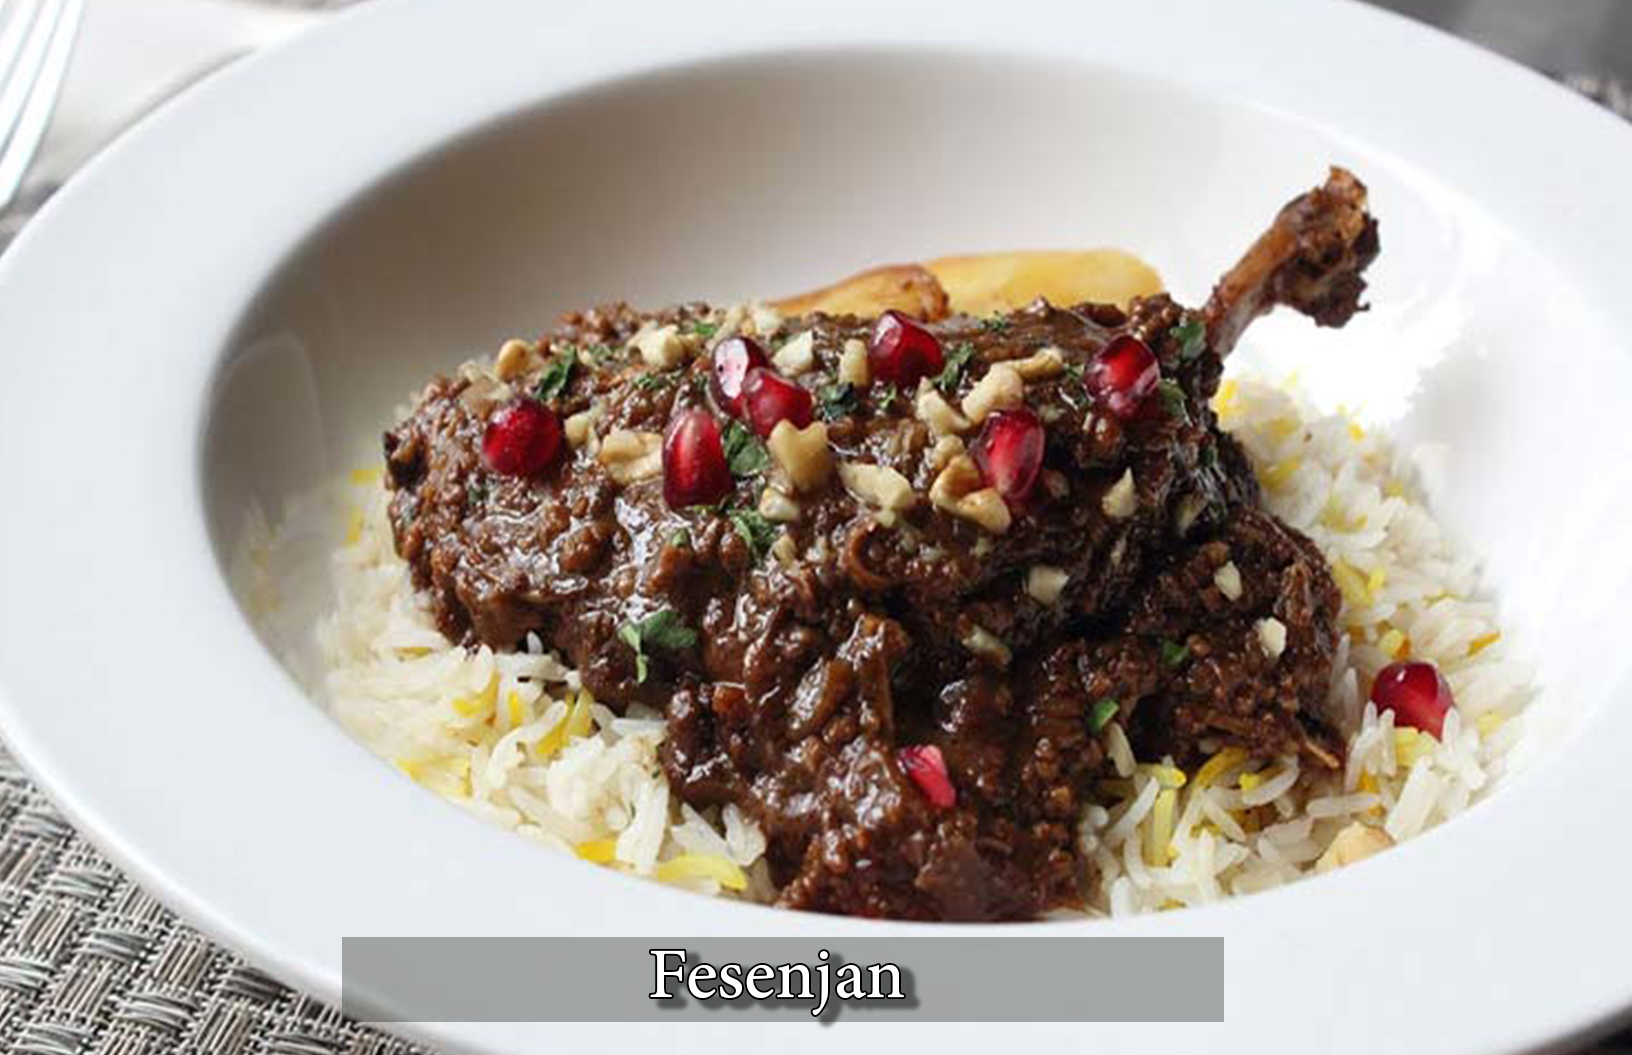 Fesenjan Iranian foods